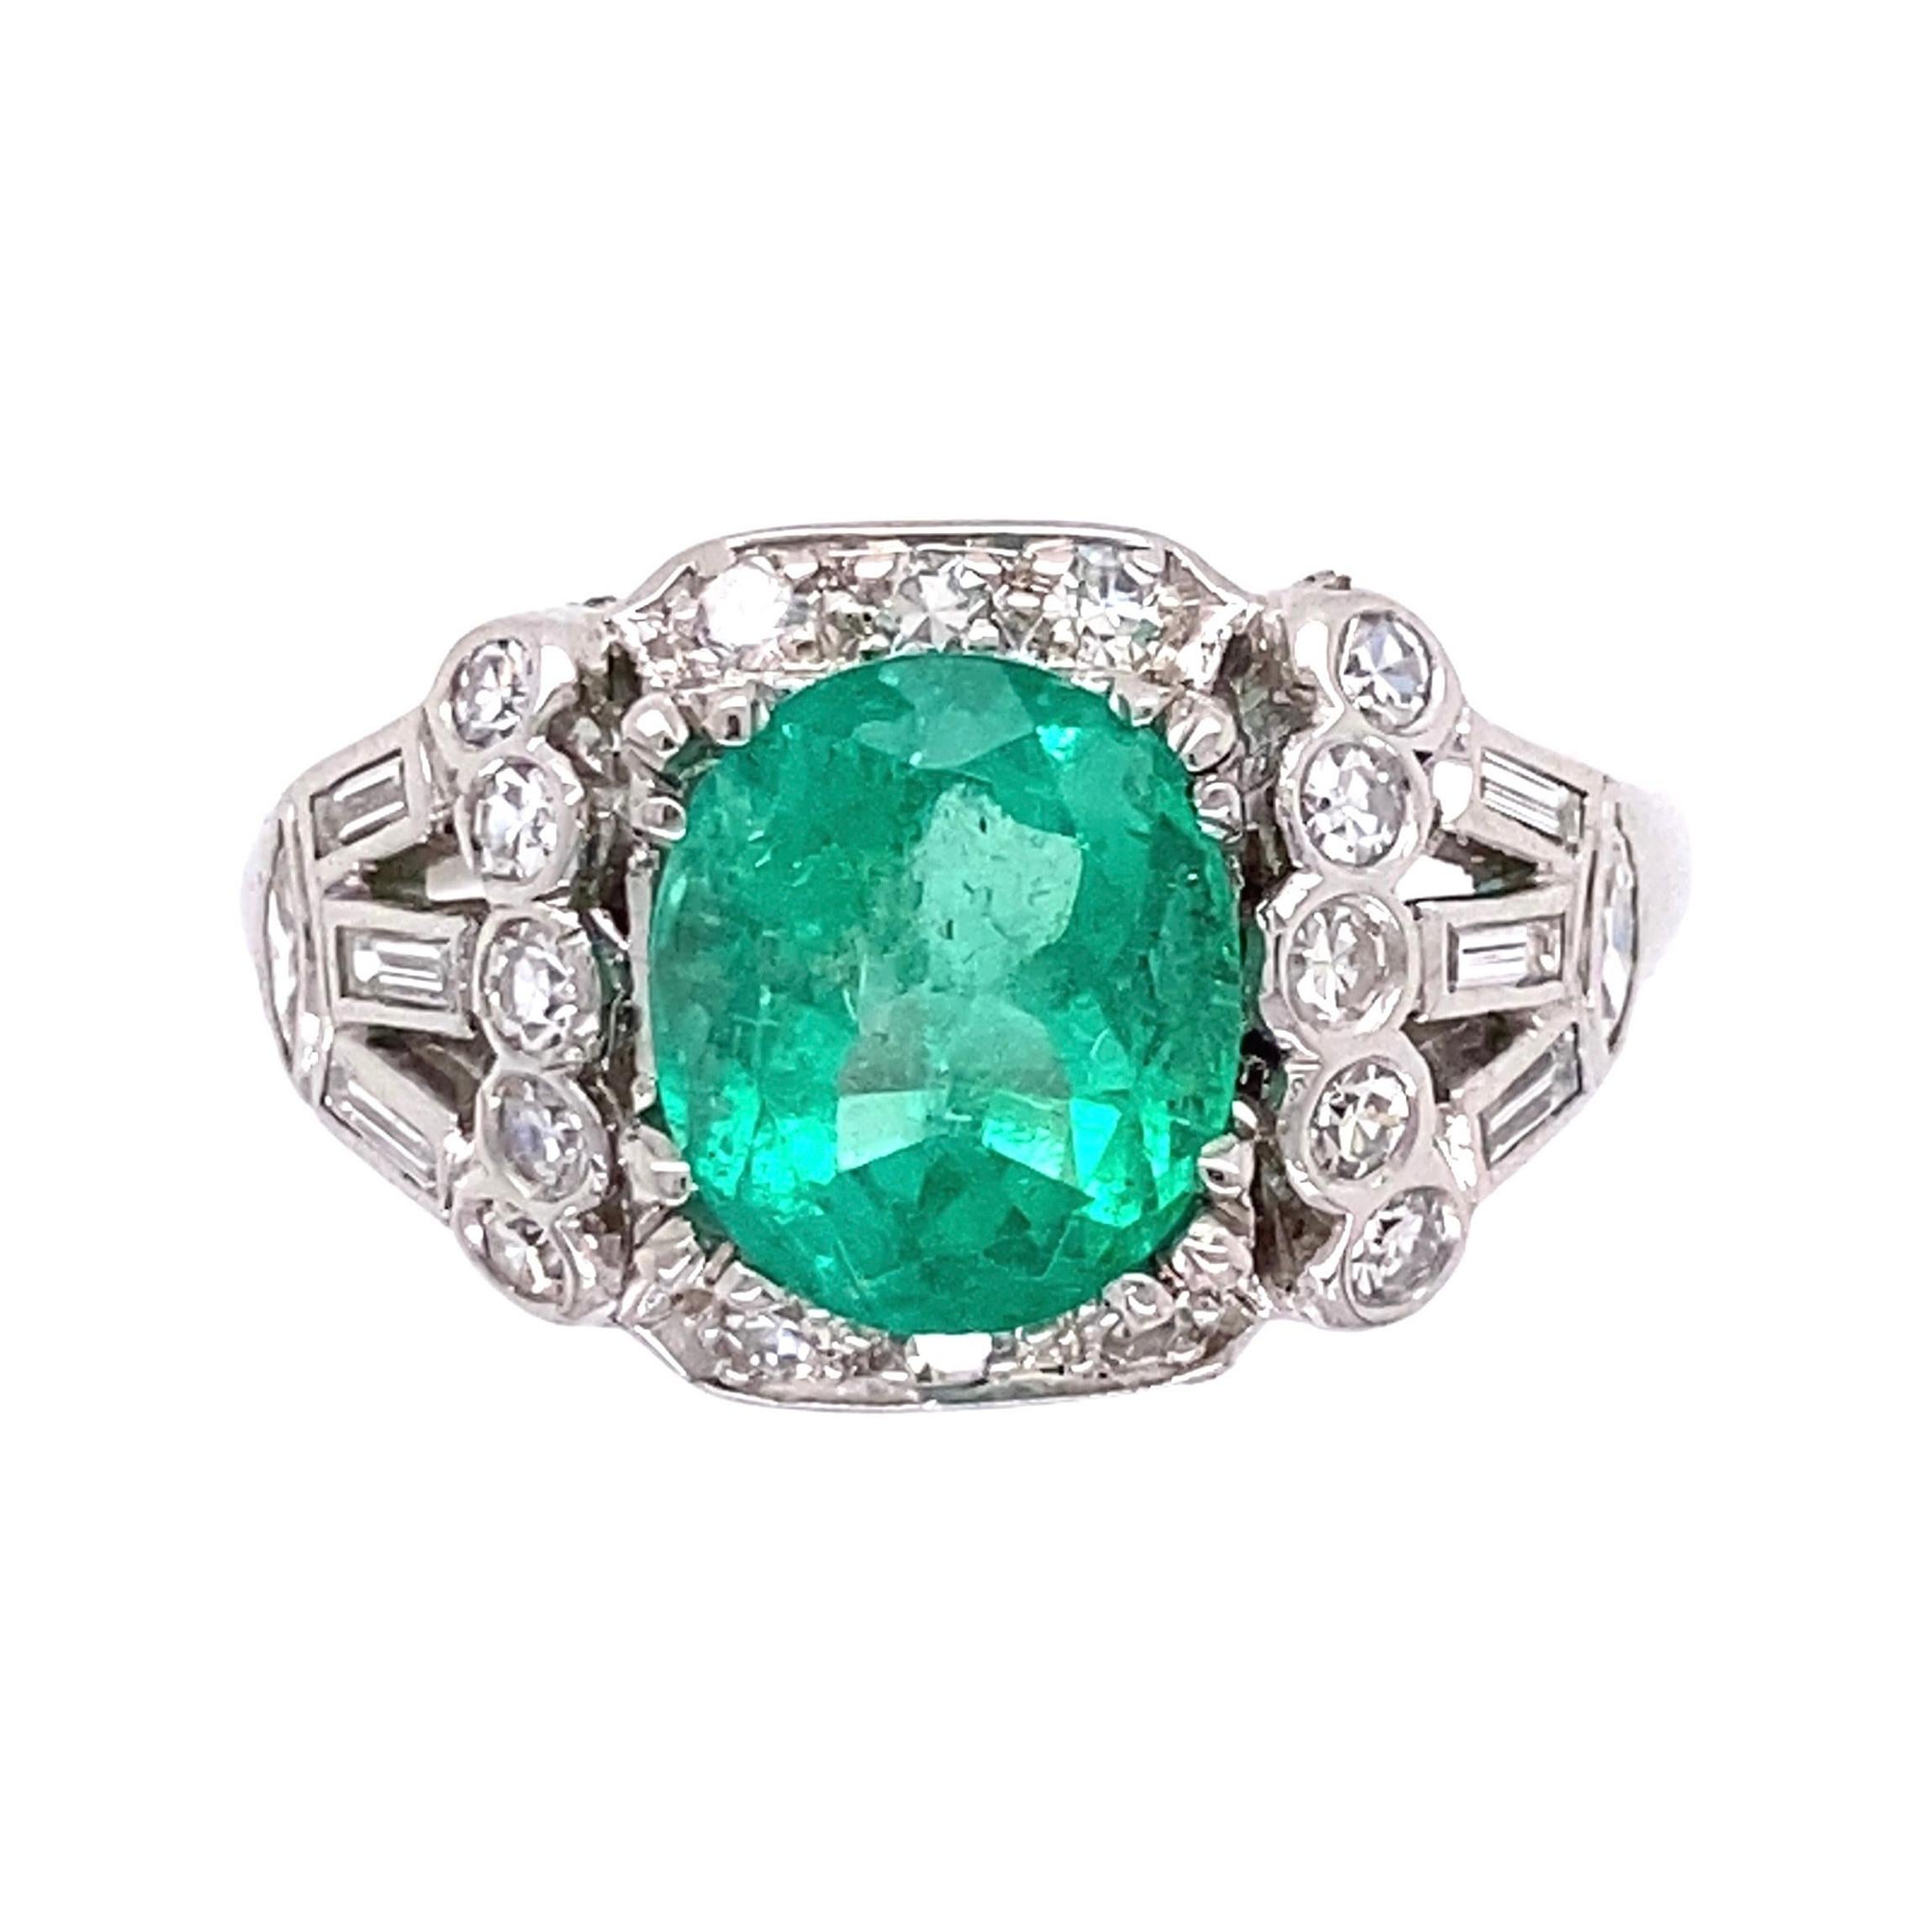 2.15 Carat Emerald and Diamond Platinum Cocktail Ring Estate Fine Jewelry